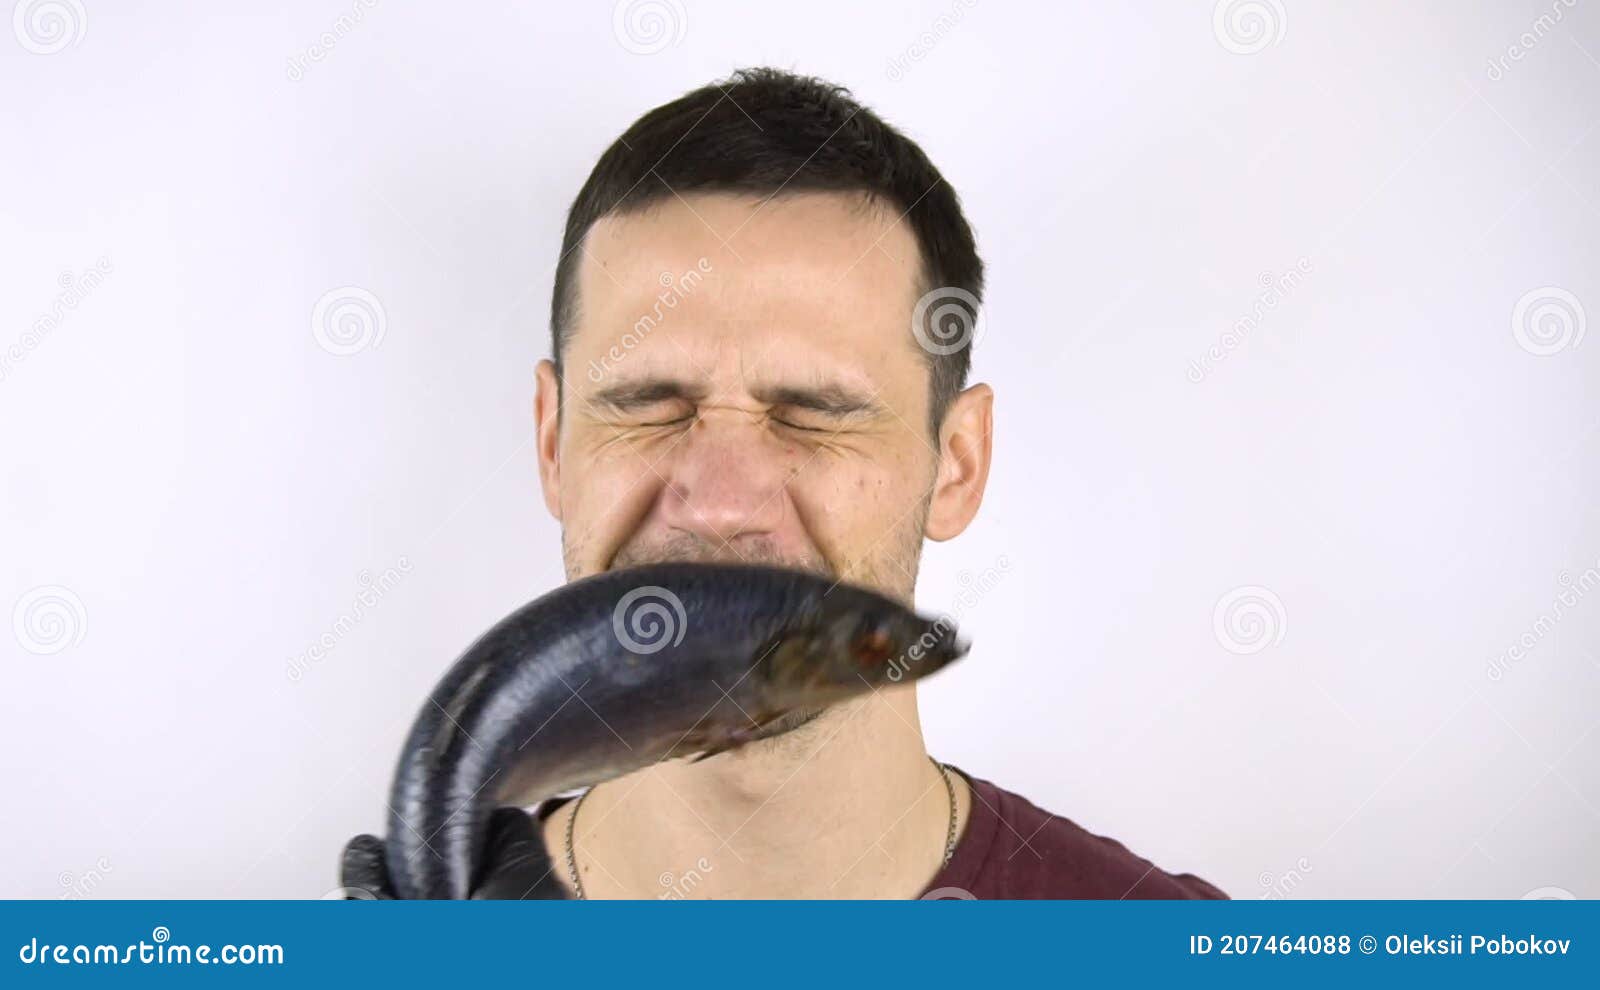 chris mandarino add photo slap a guy with an eel